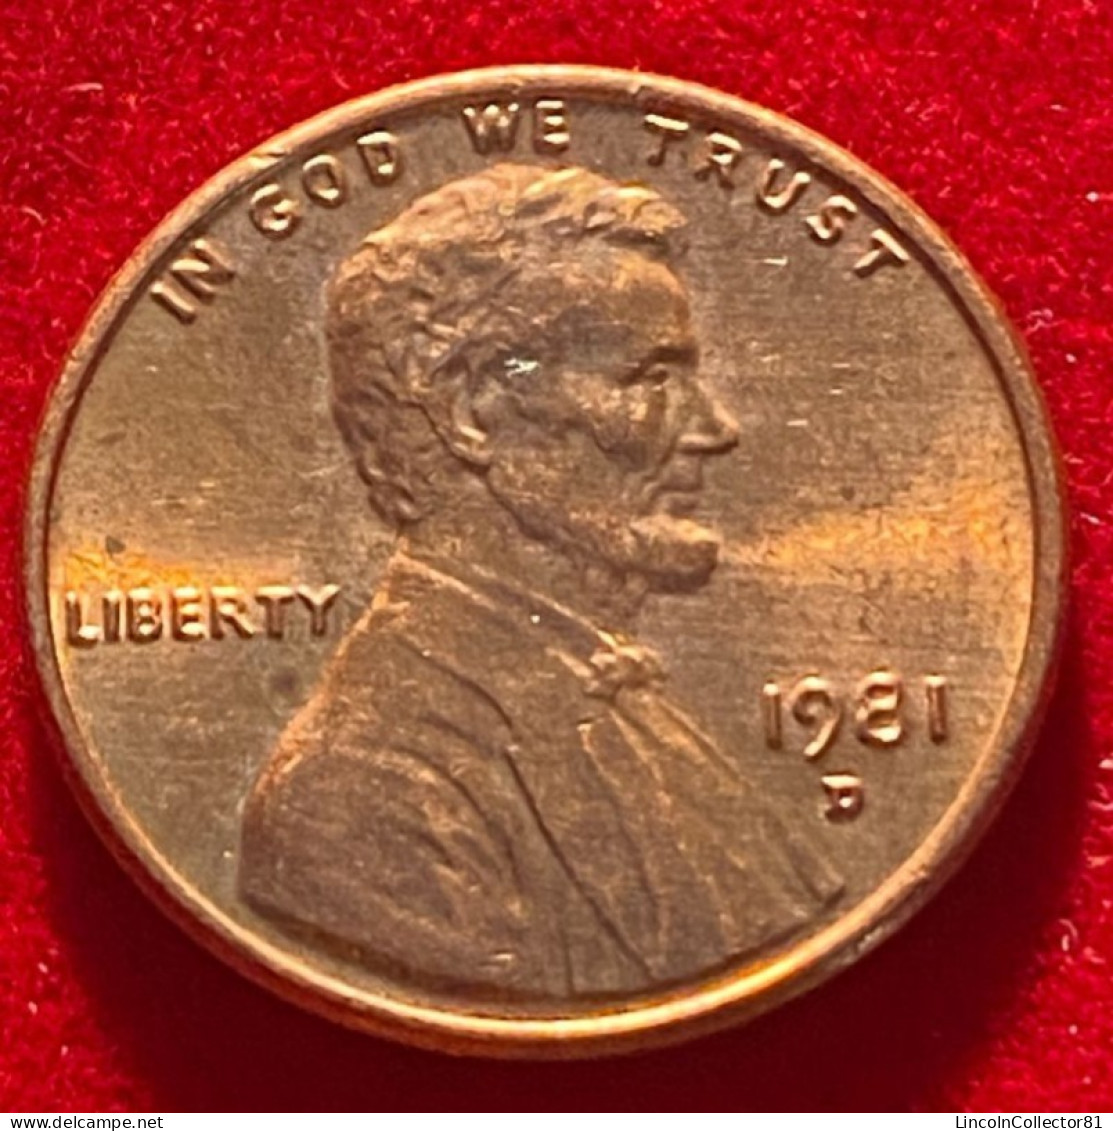 1981 D Lincoln Memorial Error Penny DDO - 1959-…: Lincoln, Memorial Reverse